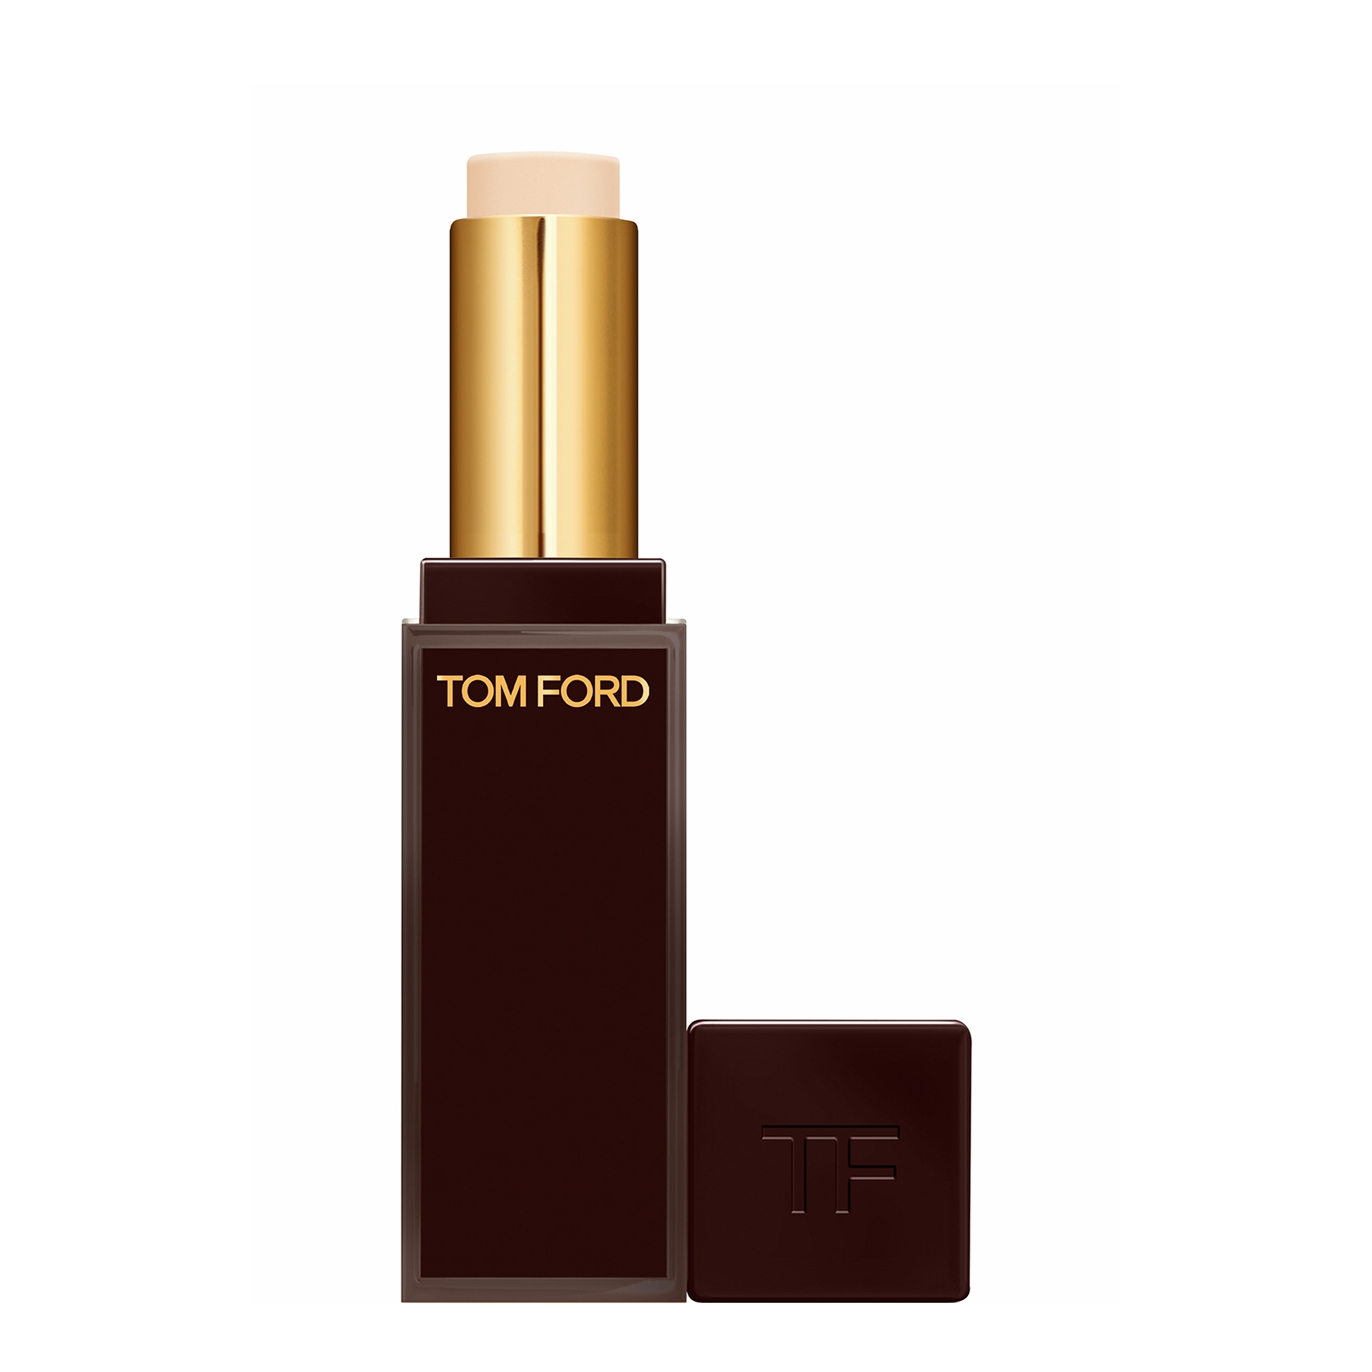 Tom Ford Traceless Soft Matte Concealer - Colour 0n0 Blanc